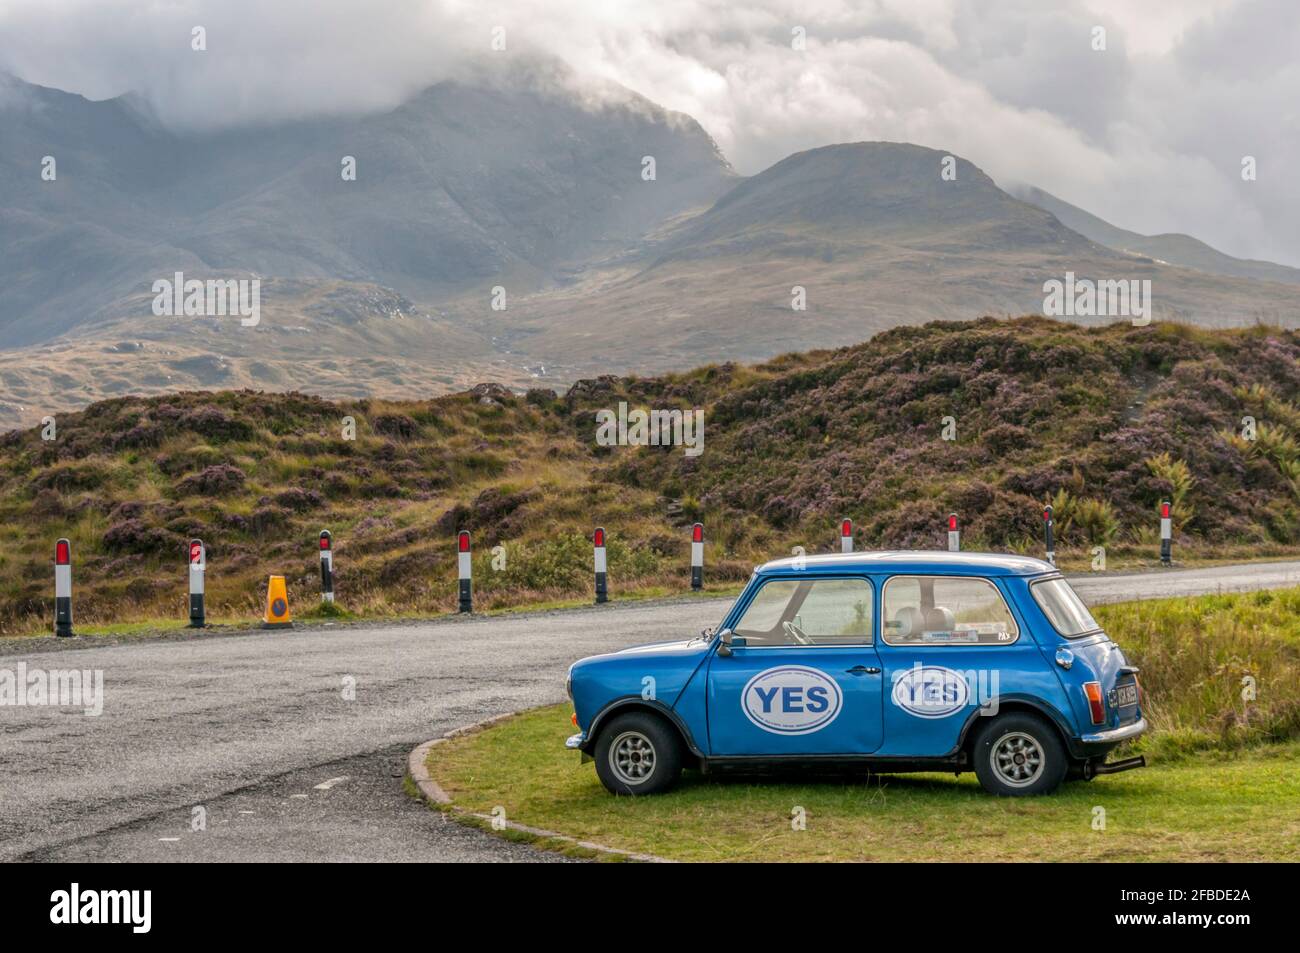 Un mini coche en la isla de Skye que promueve un Sí vota en el referéndum de independencia escocés de 2014 Foto de stock